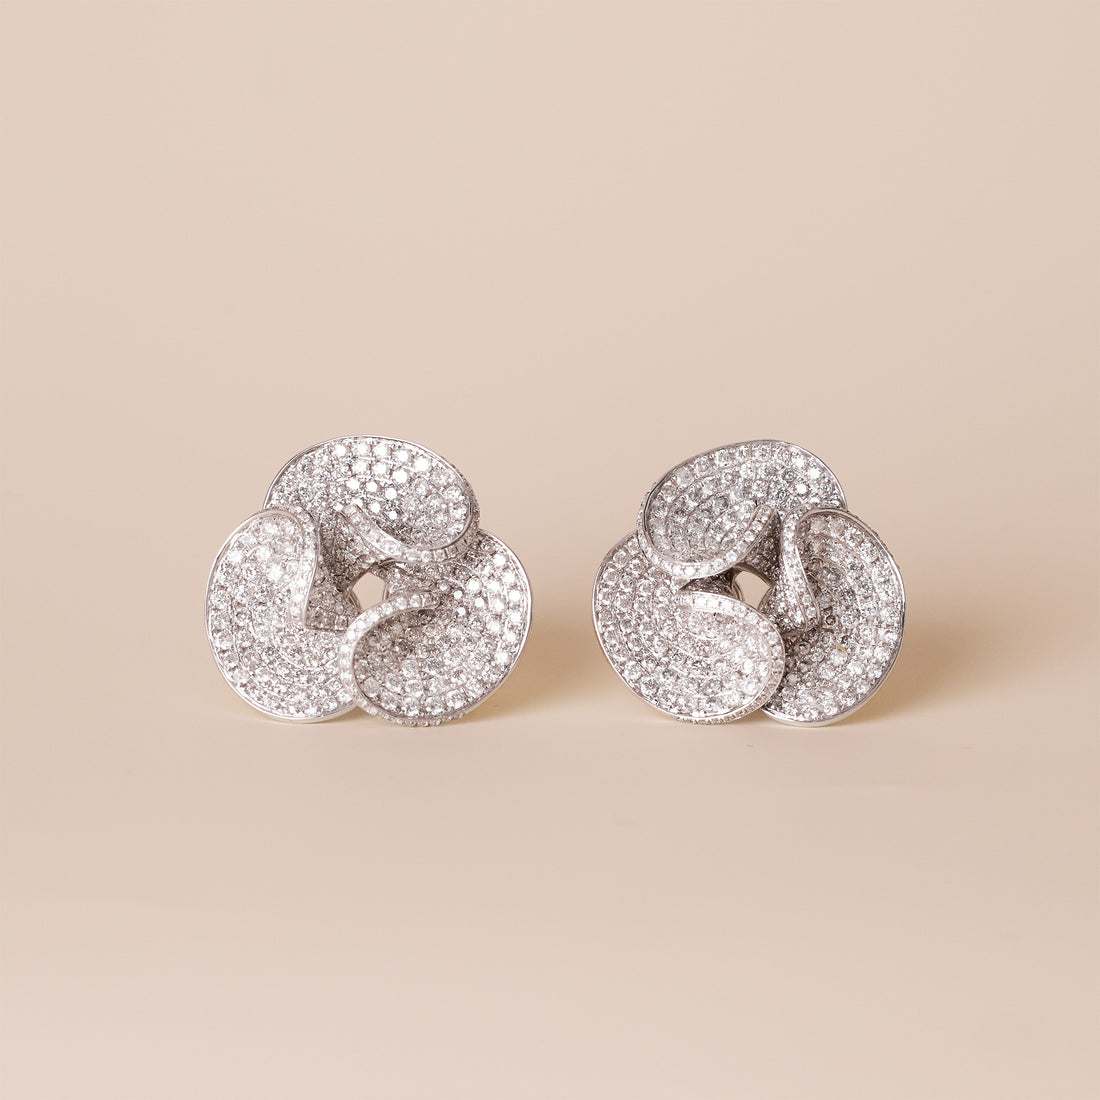 4.07ct.tw. Natural Diamond Earrings in 18K Gold